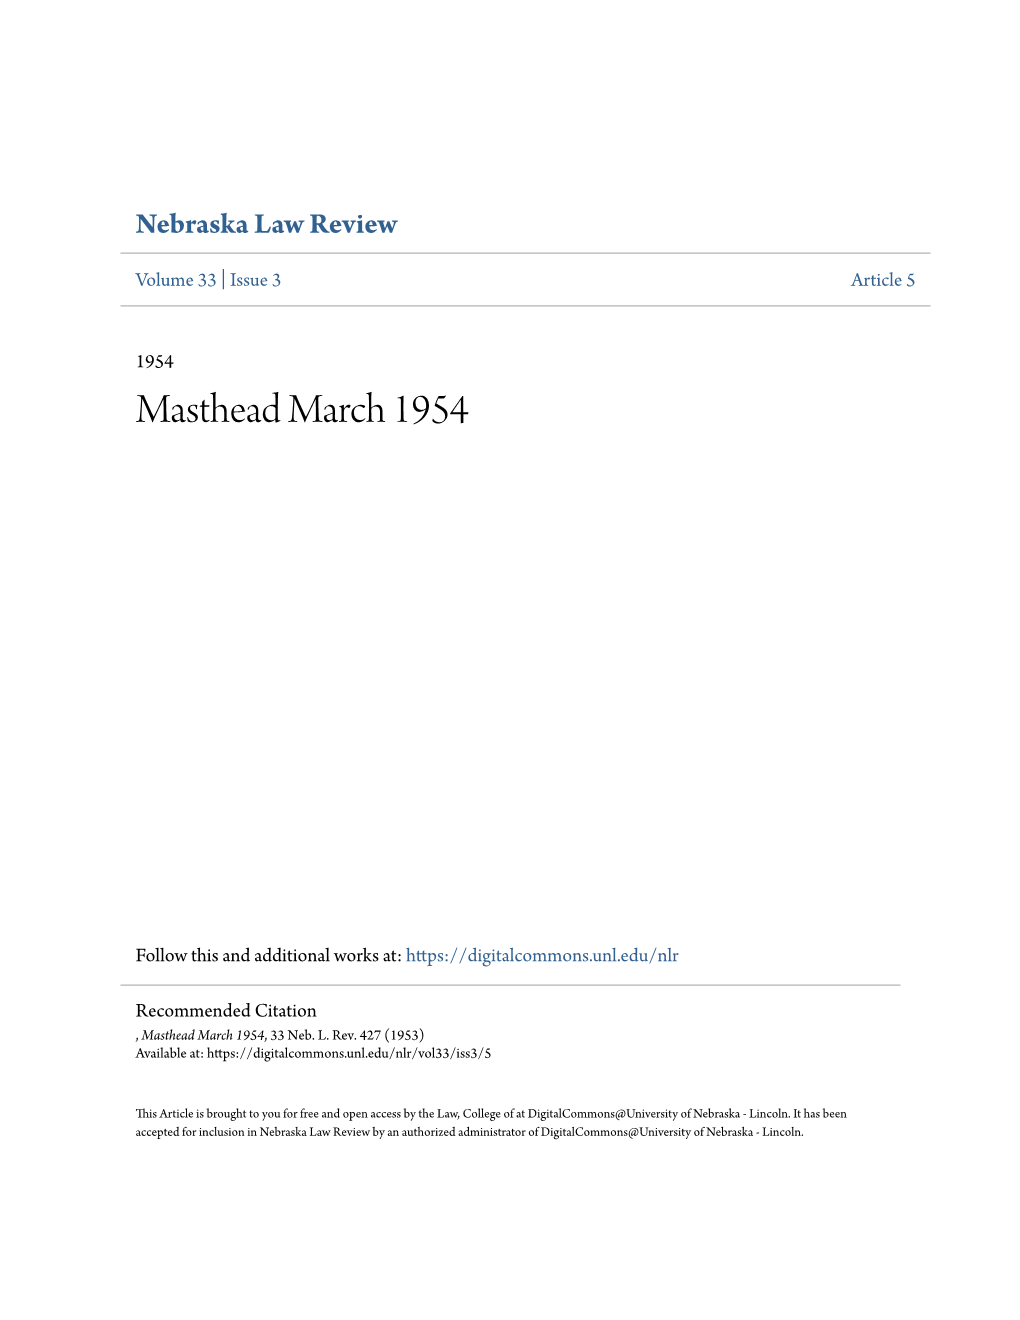 Masthead March 1954